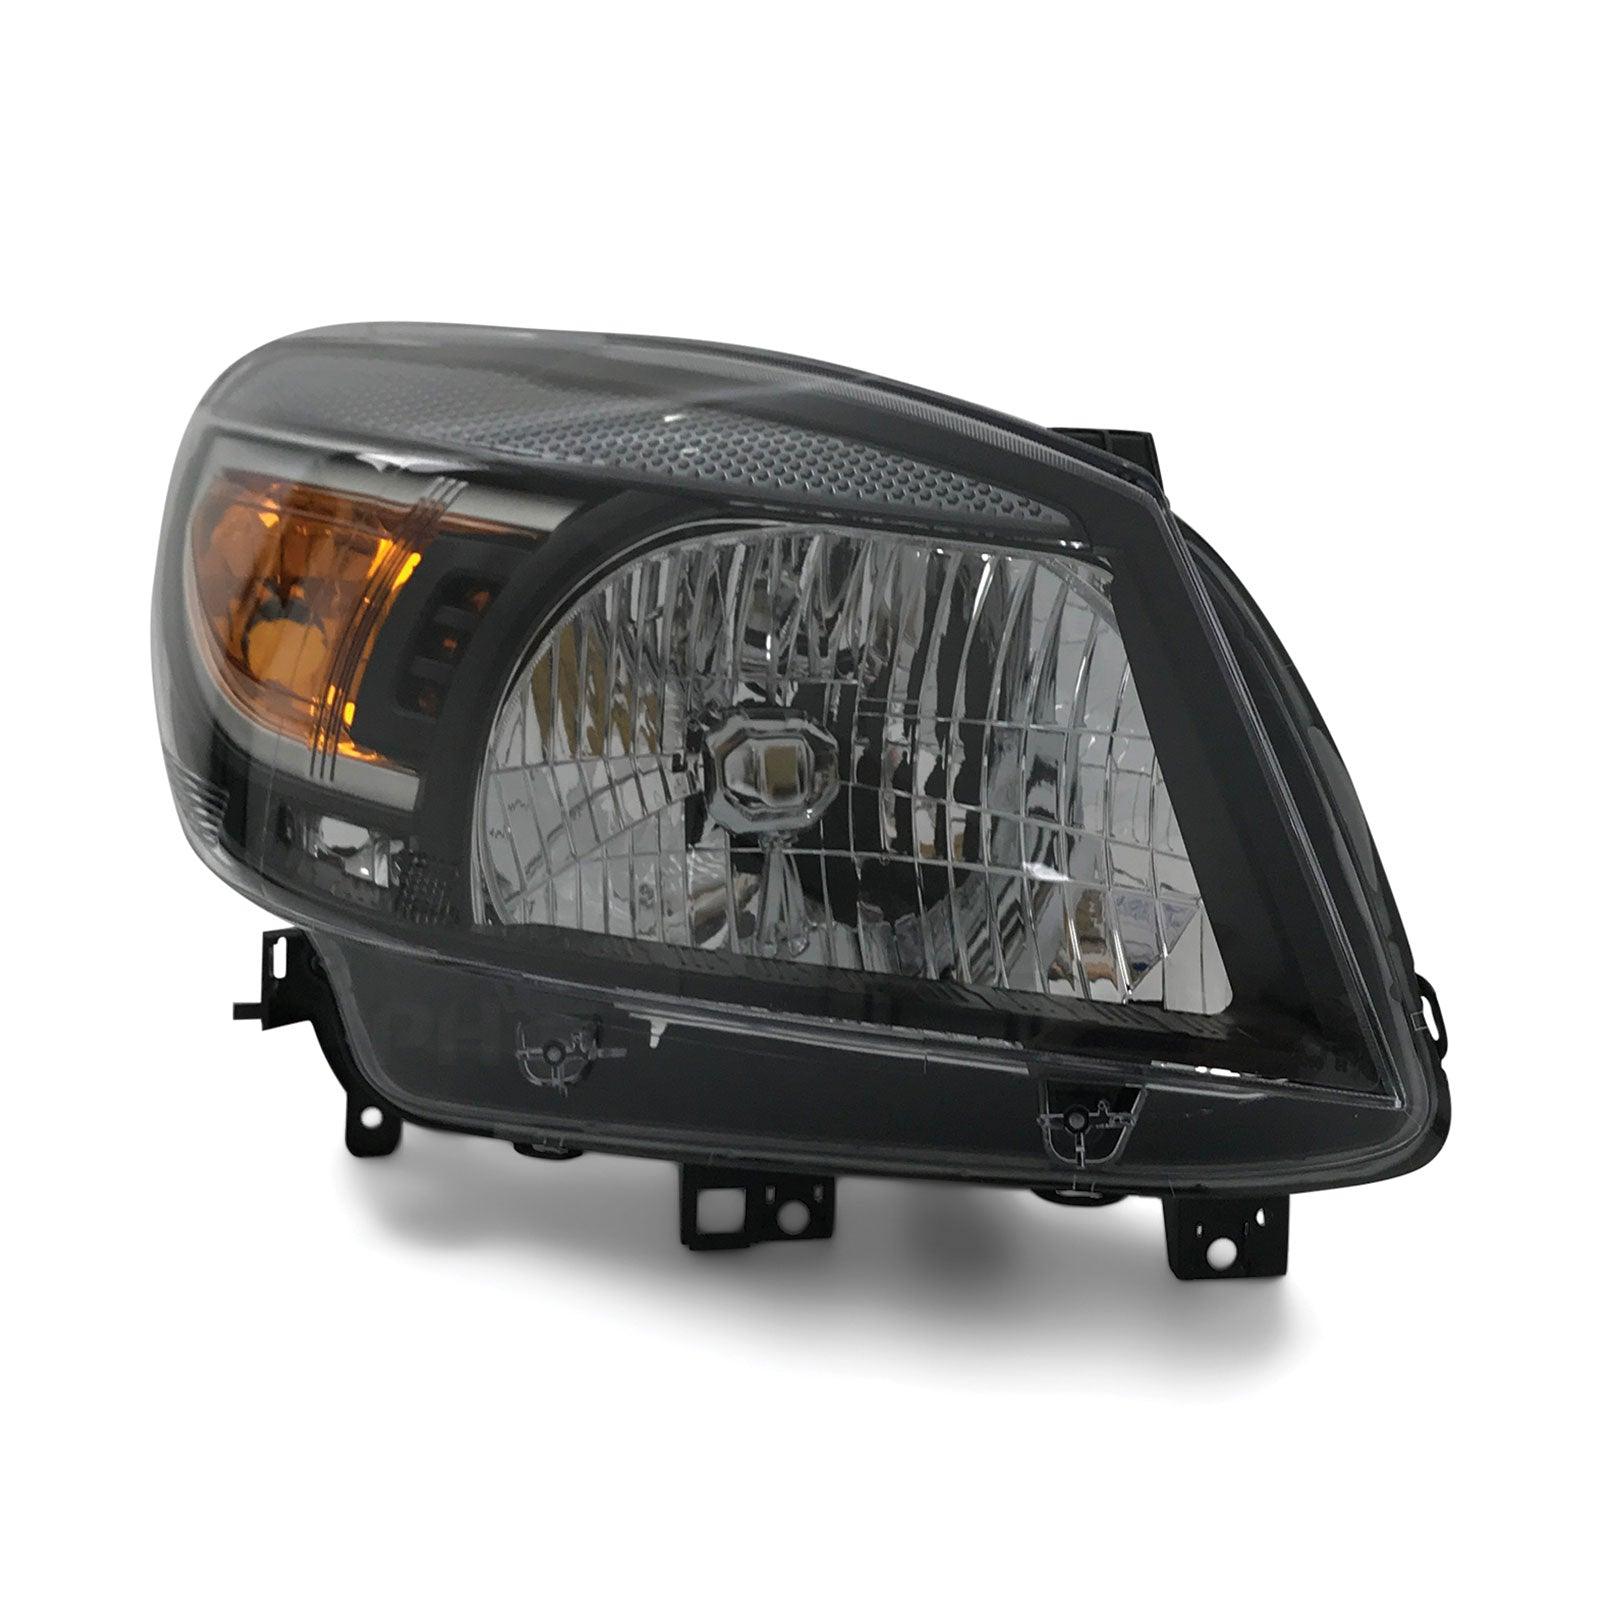 Headlight Black RIGHT Fits Ford Ranger PK 2009 - 2011 - 4X4OC™